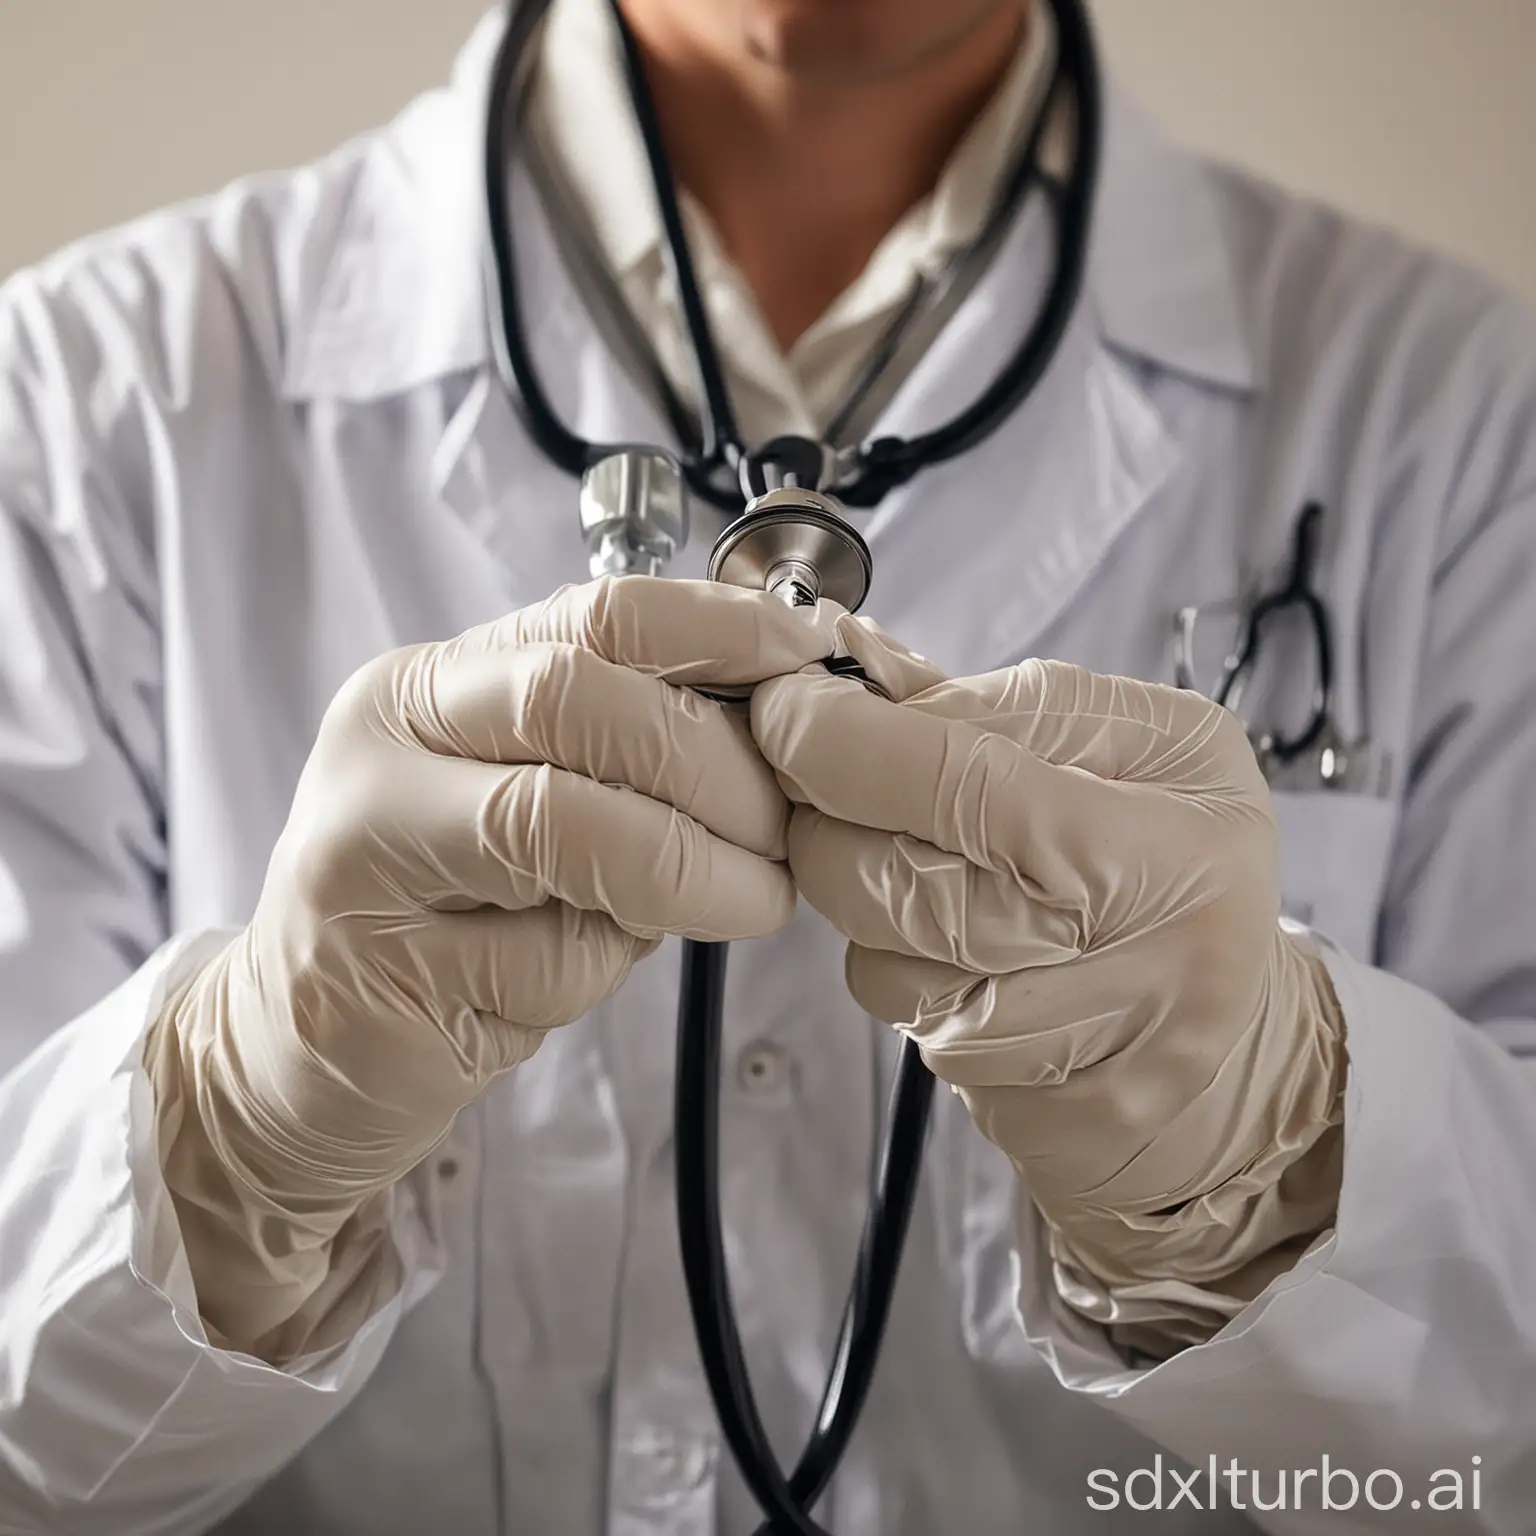 Medical-Professional-Wearing-White-Gloves-Holding-Stethoscope